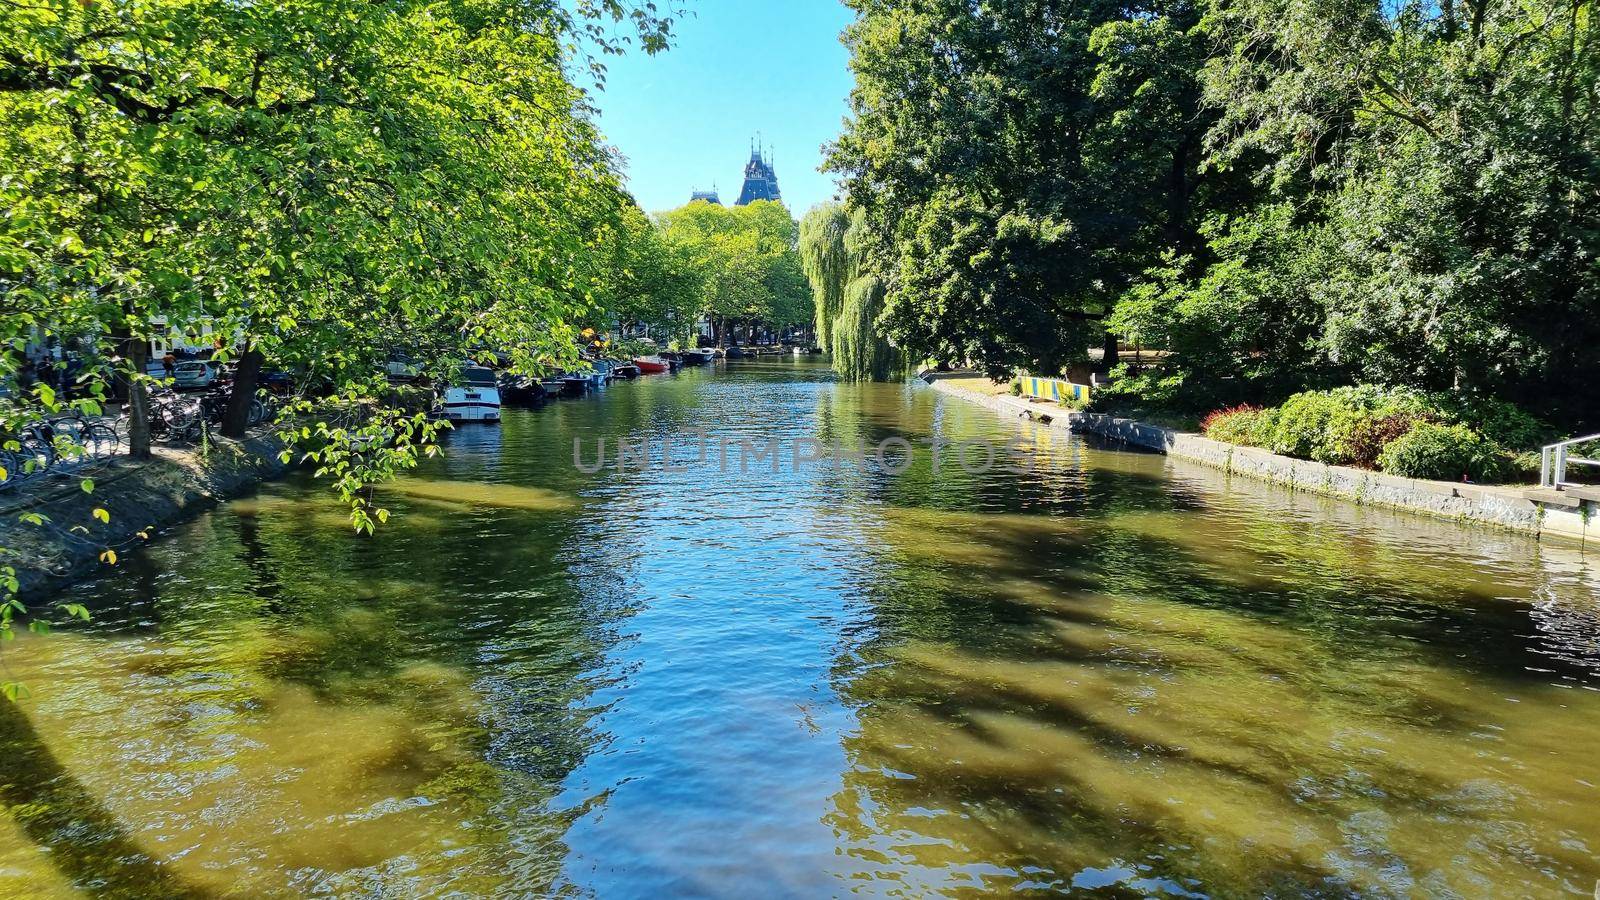 Channel in Amsterdam Netherlands. Houses river Amstel landmark. Old European city summer landscape.